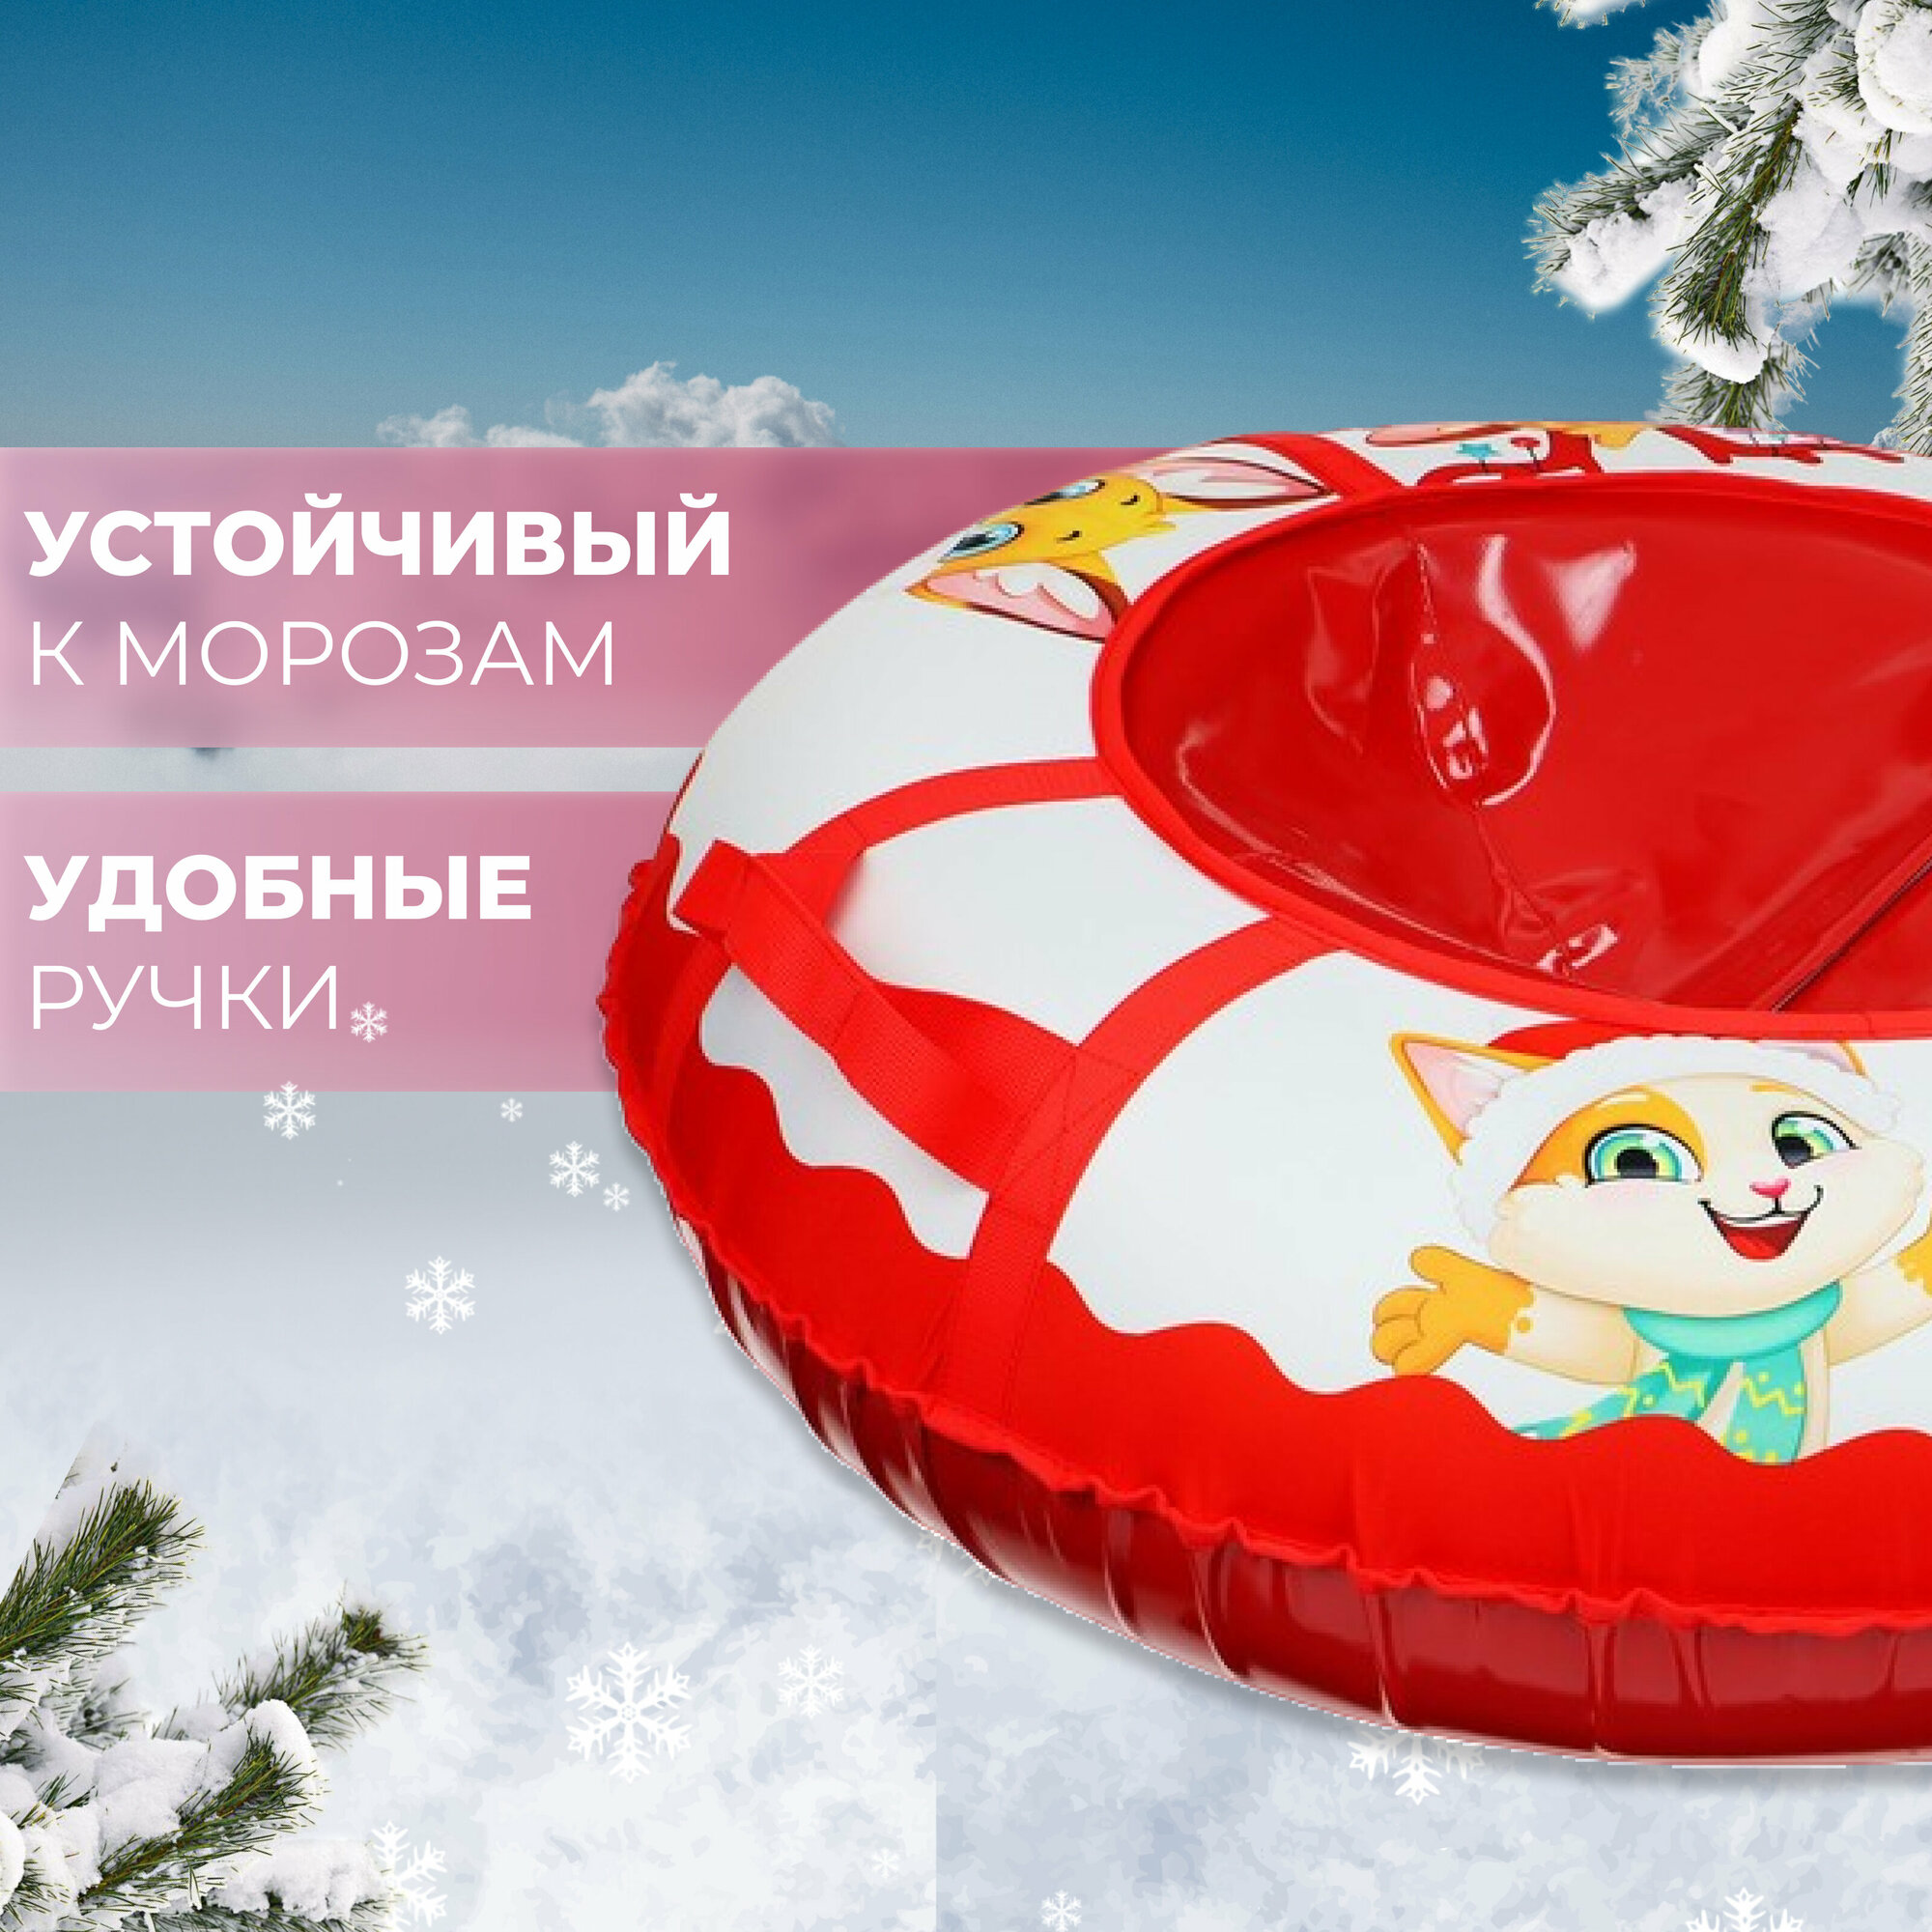 Тюбинг-ватрушка Winter Star Kids, диаметр чехла 93 см, цвет красный